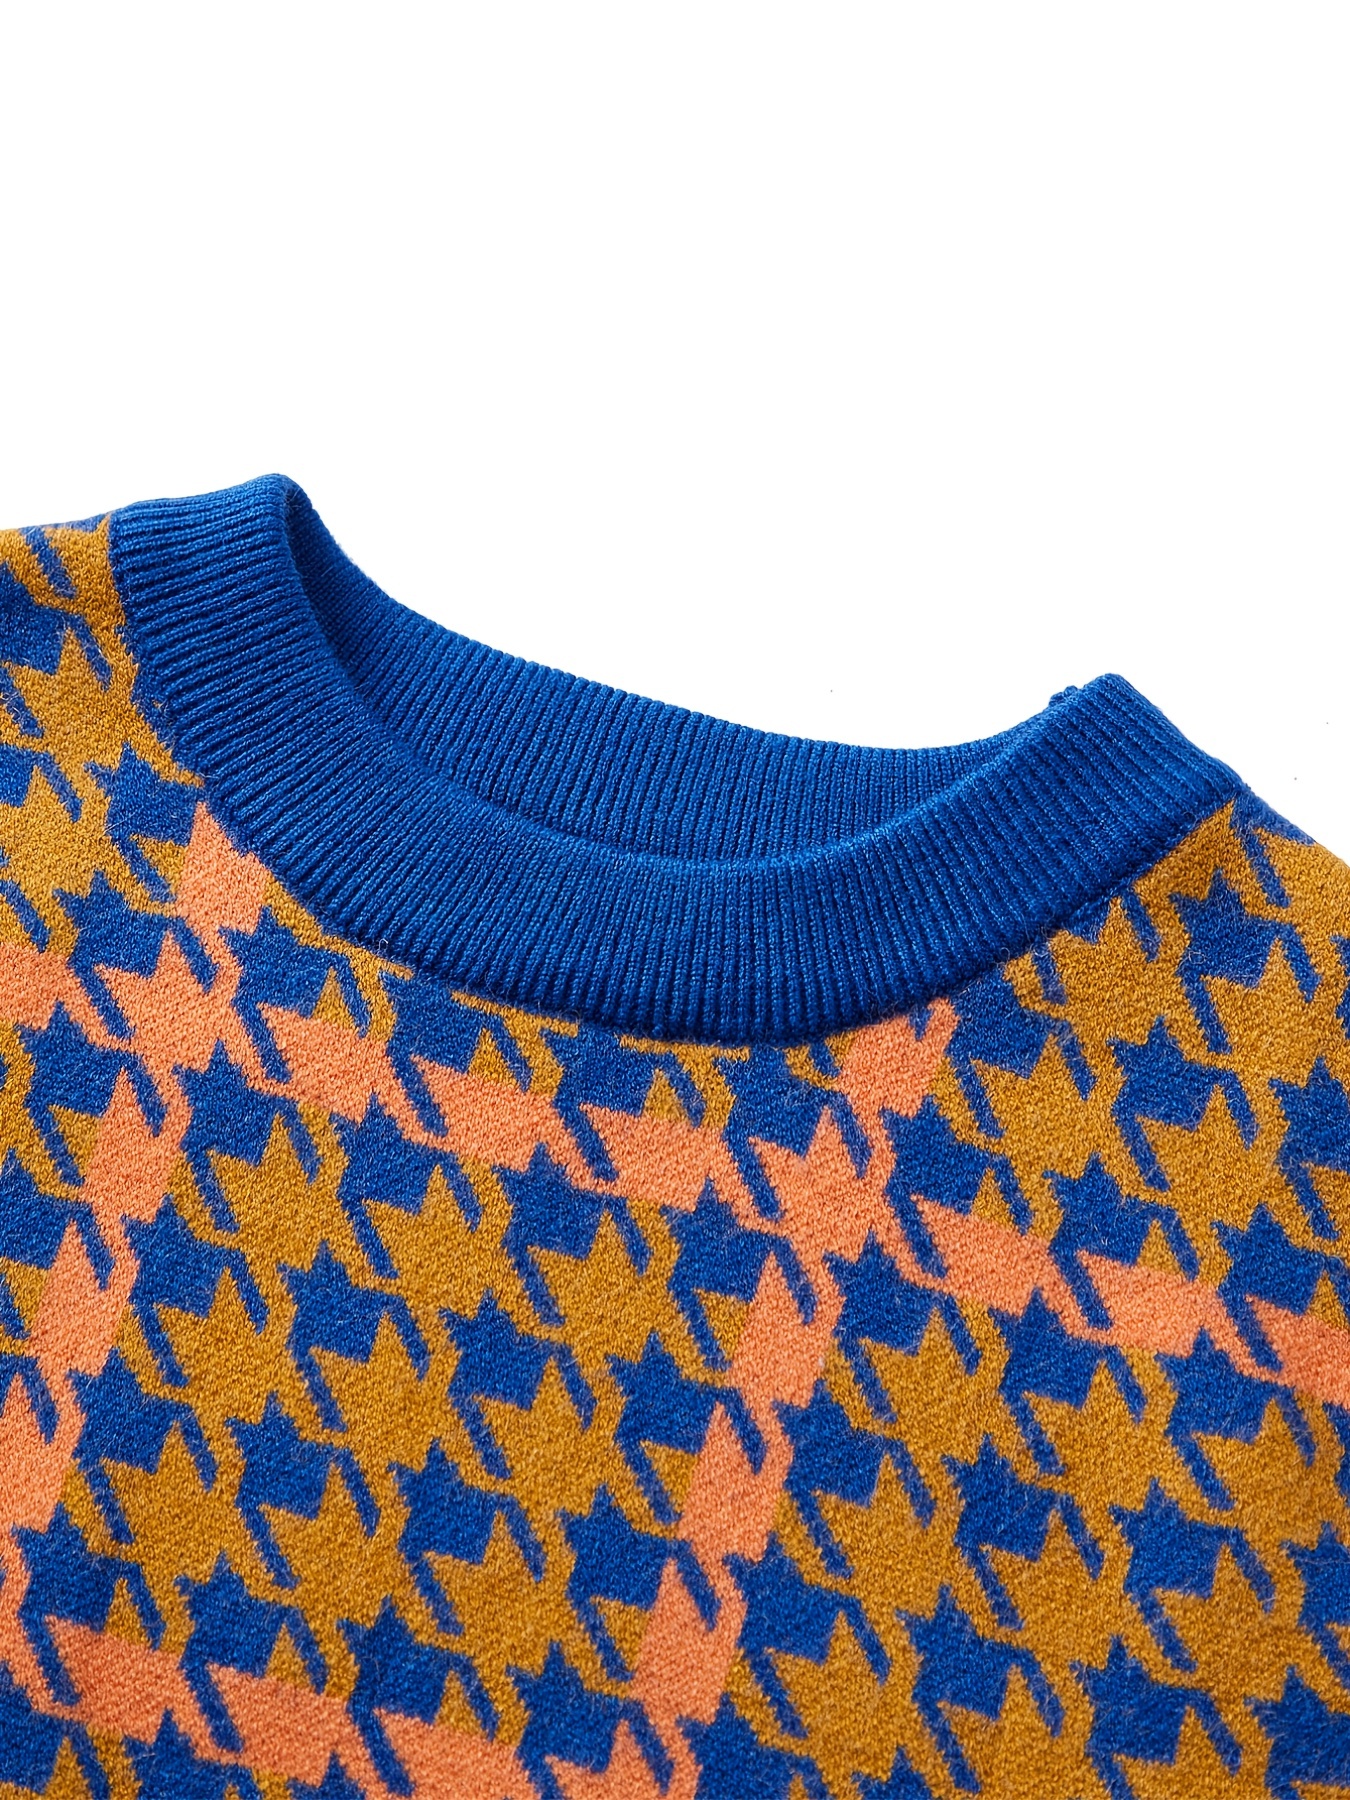 Women Houndstooth Pattern Knit Sweater Vest Sleeveless Loose V-Neck 90s  Waistcoat Pullover Knitwear Top Khaki